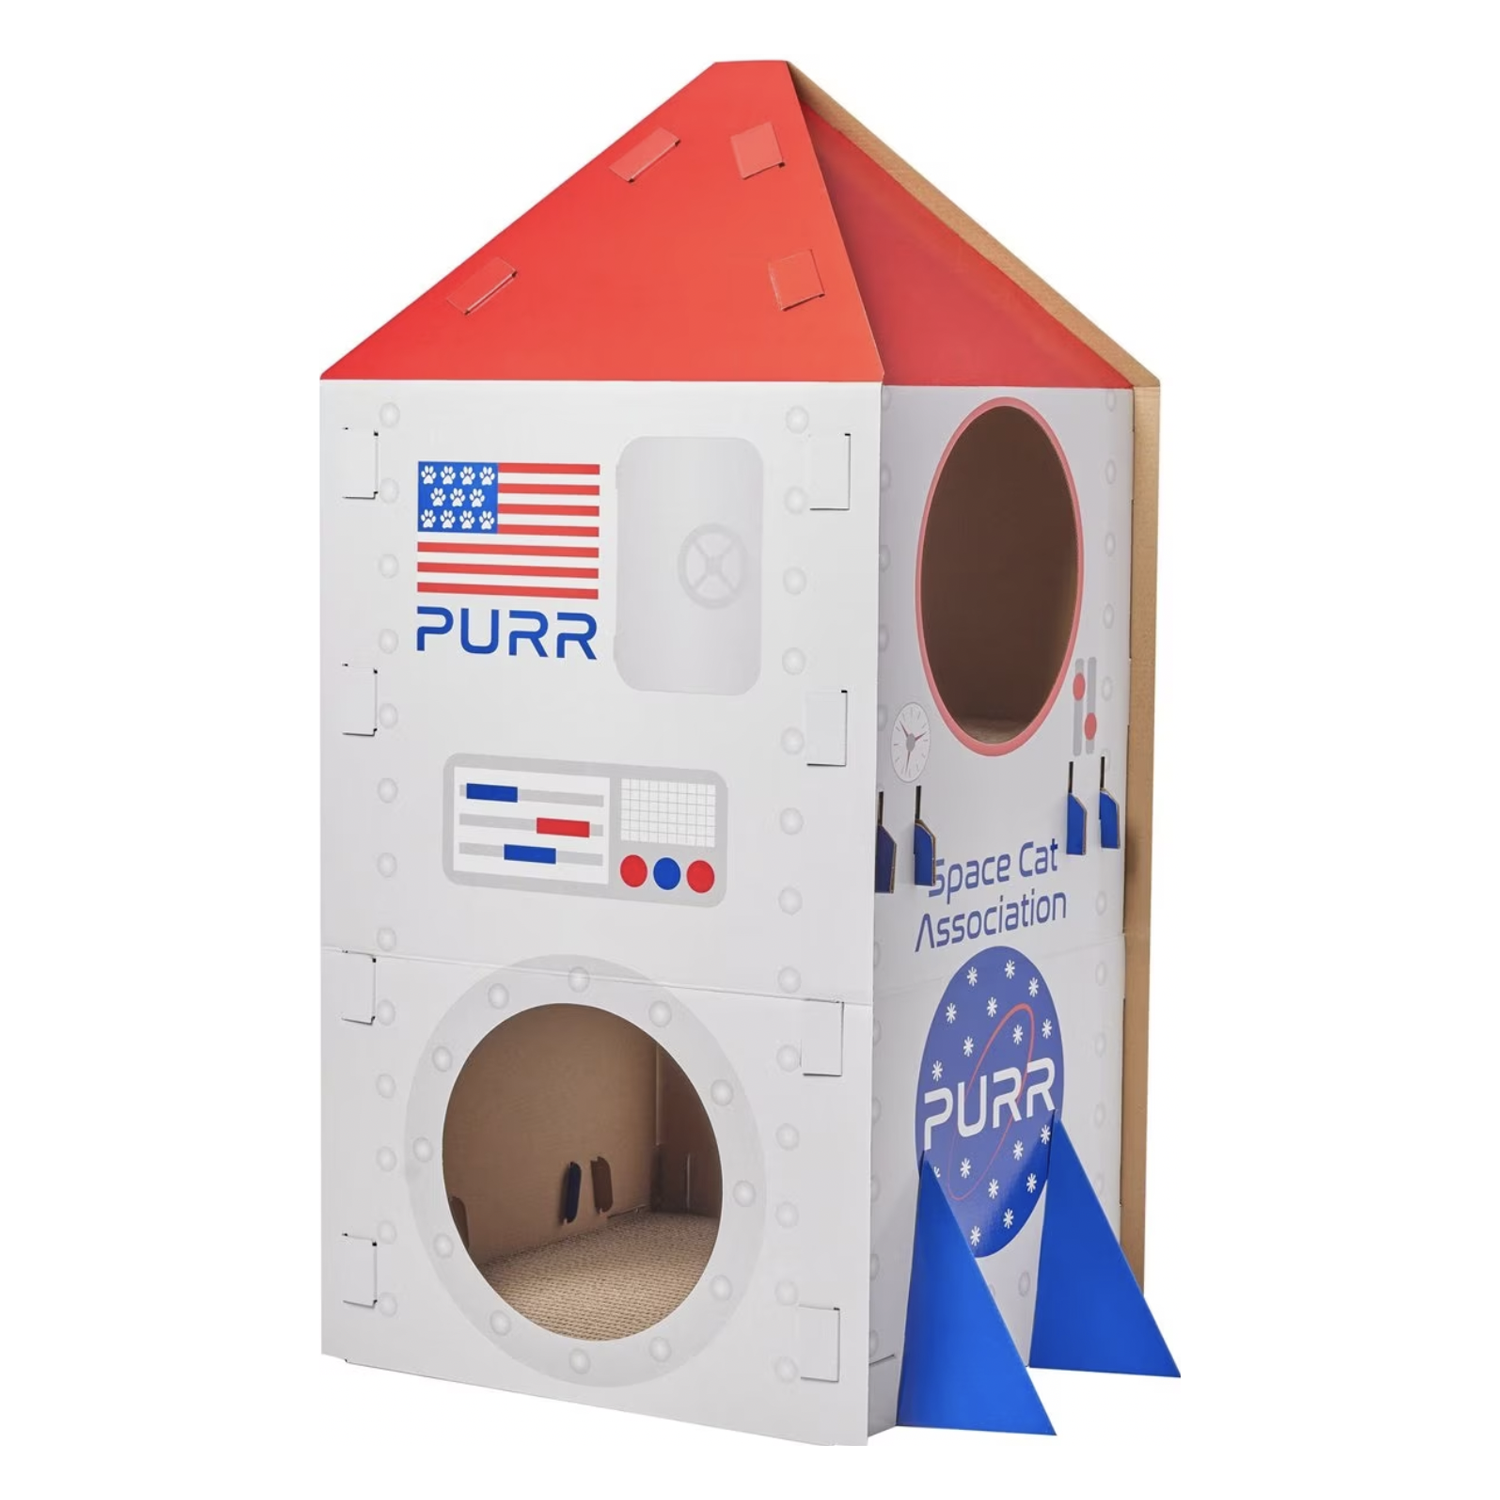 Frisco Spaceship Cardboard Cat House